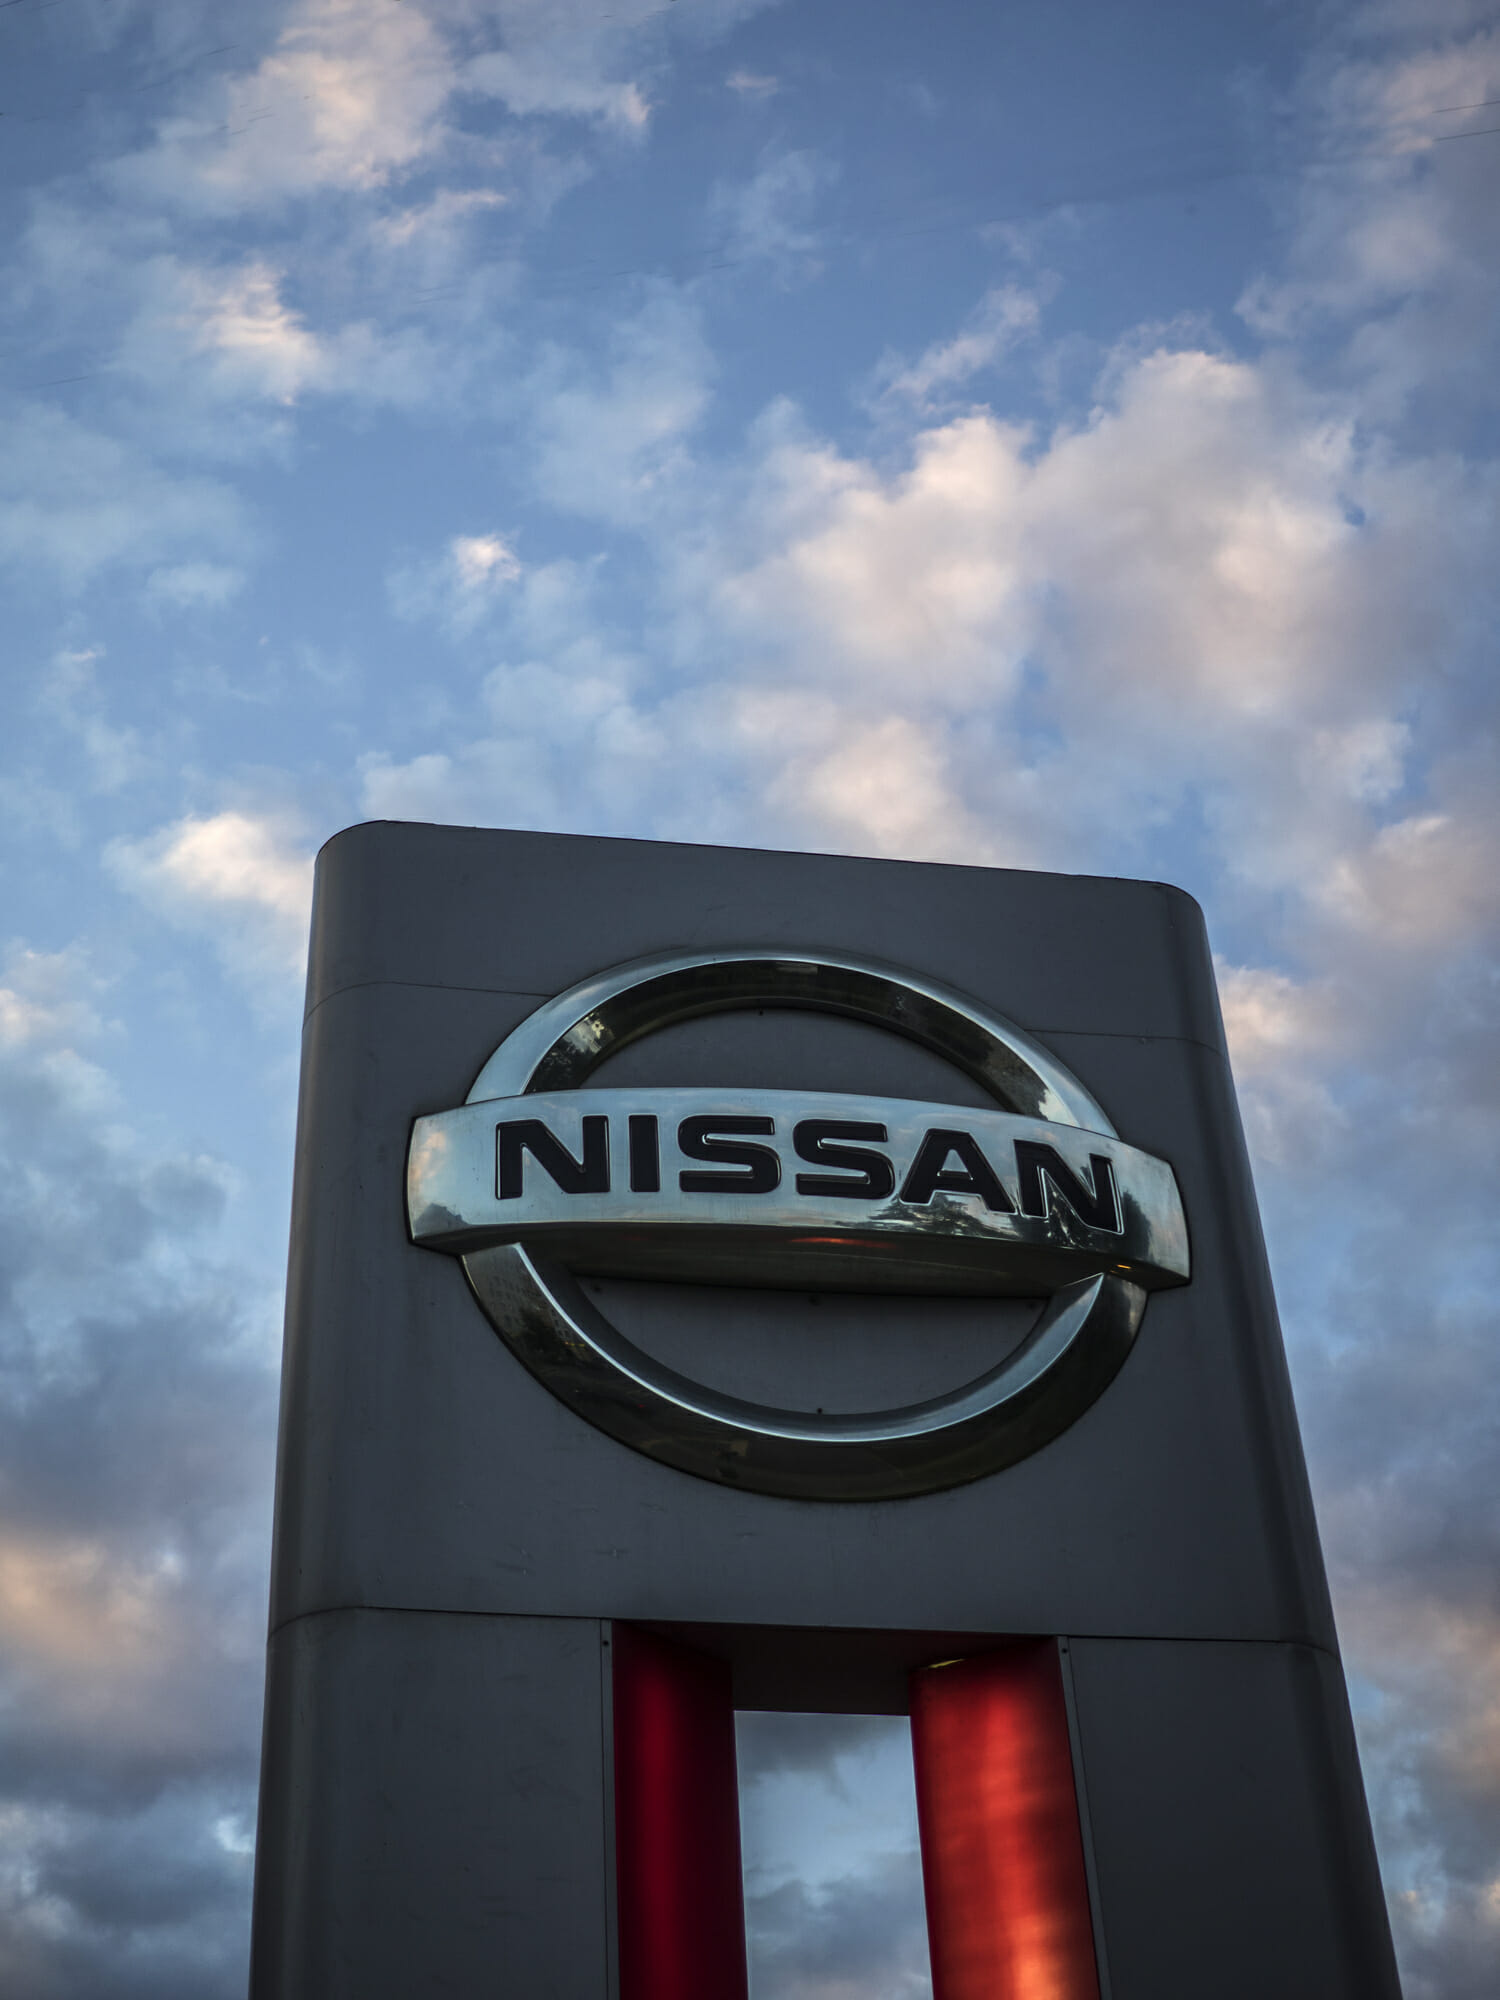 Nissan Key Battery: Choosing the Best One